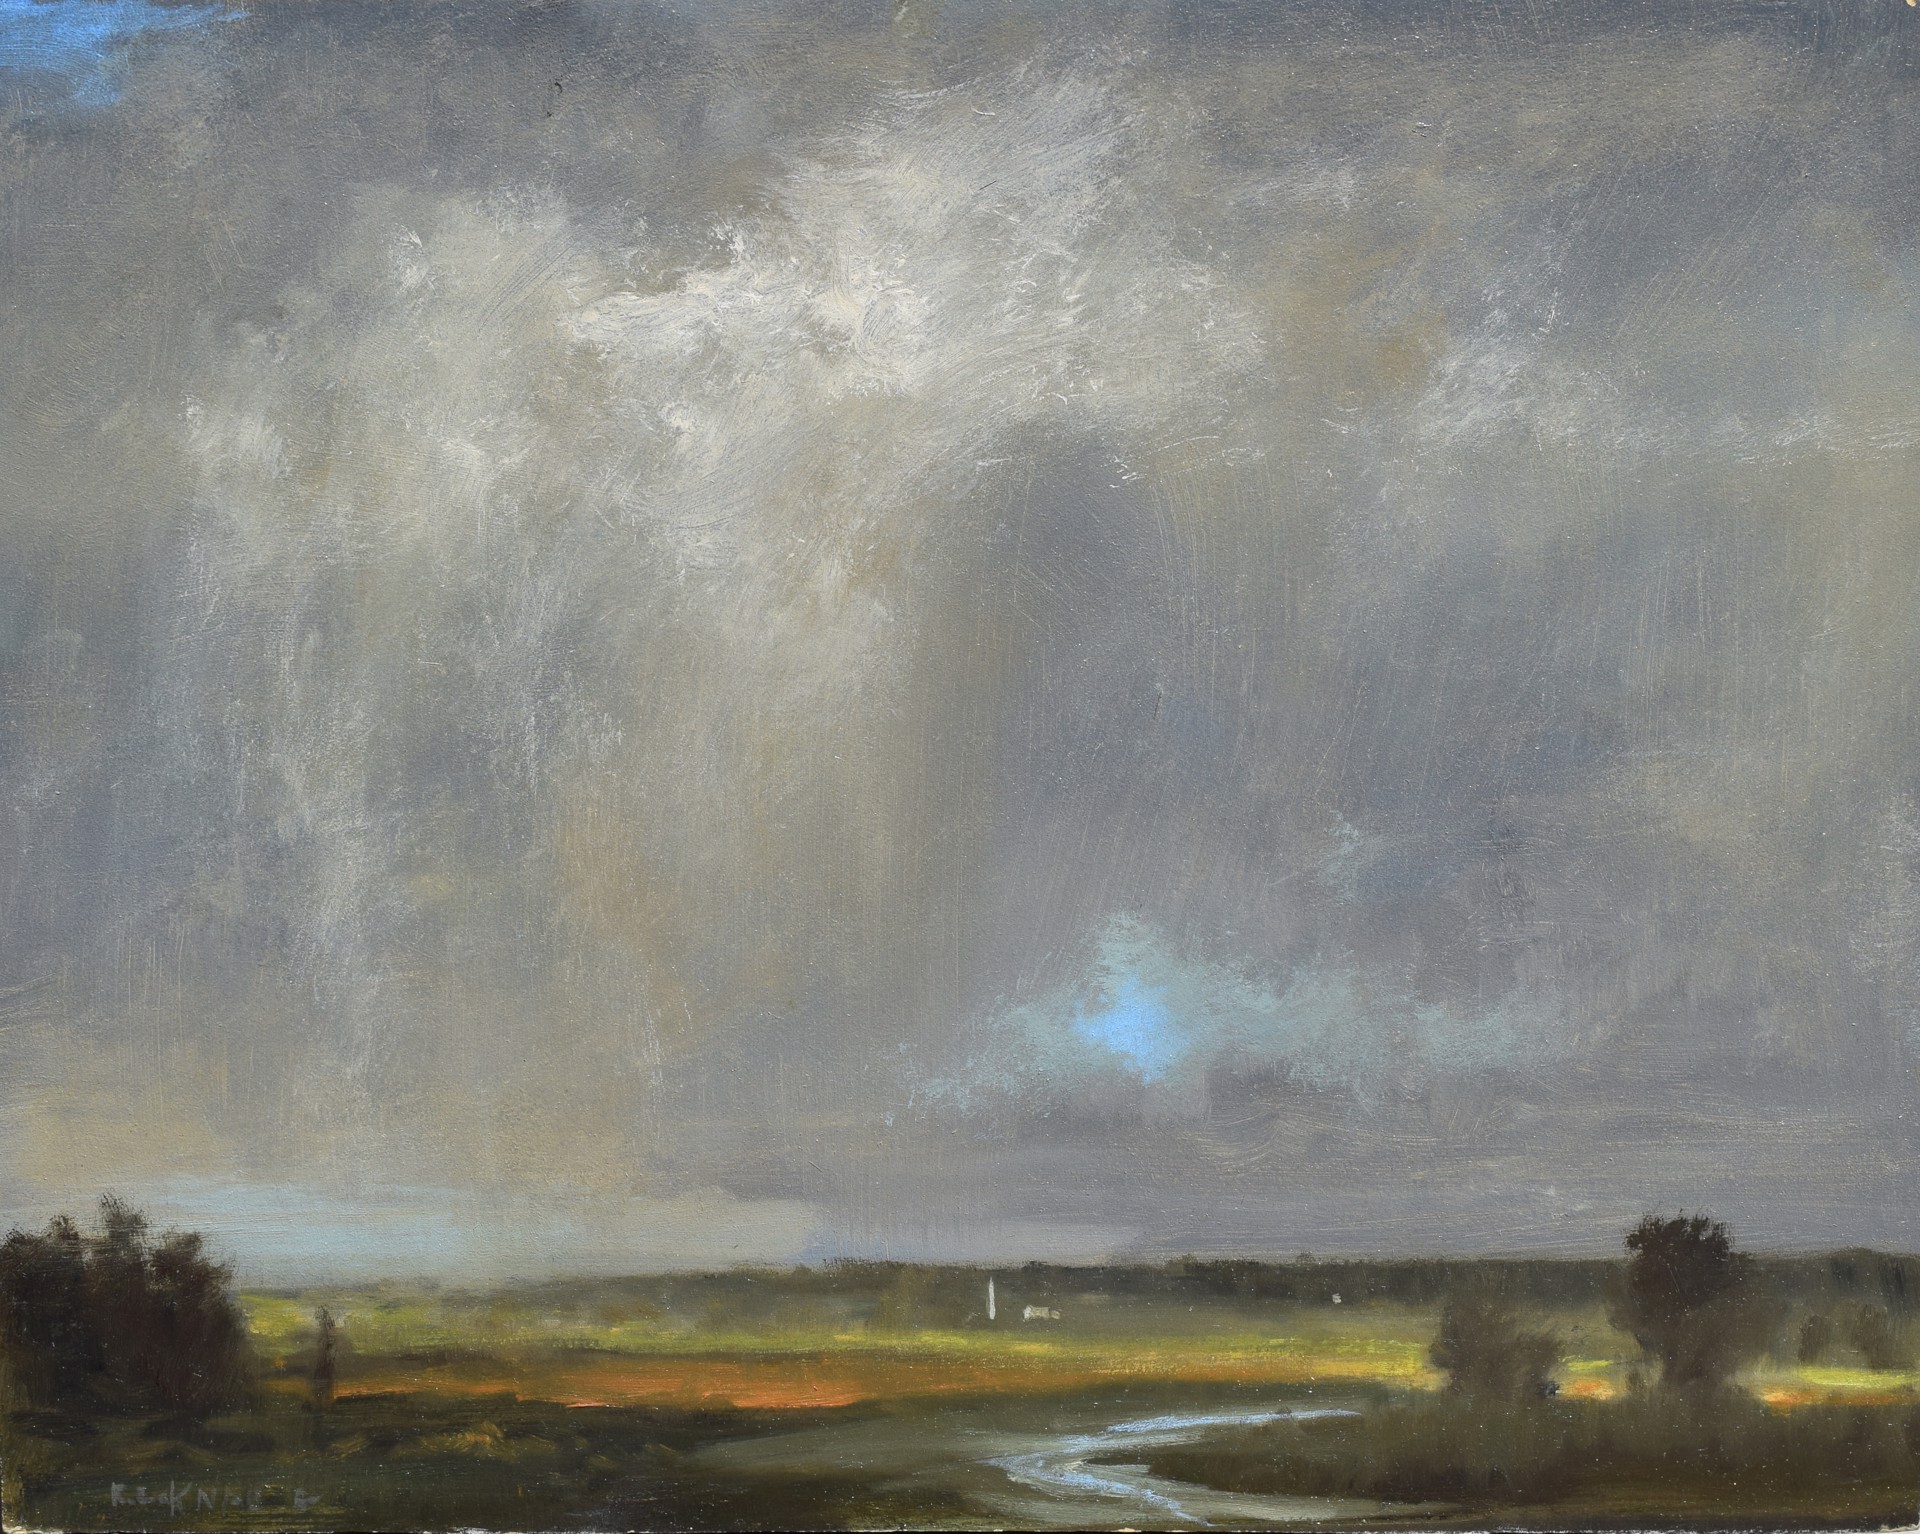 Storm on the Prairie by Ray L. Knaub